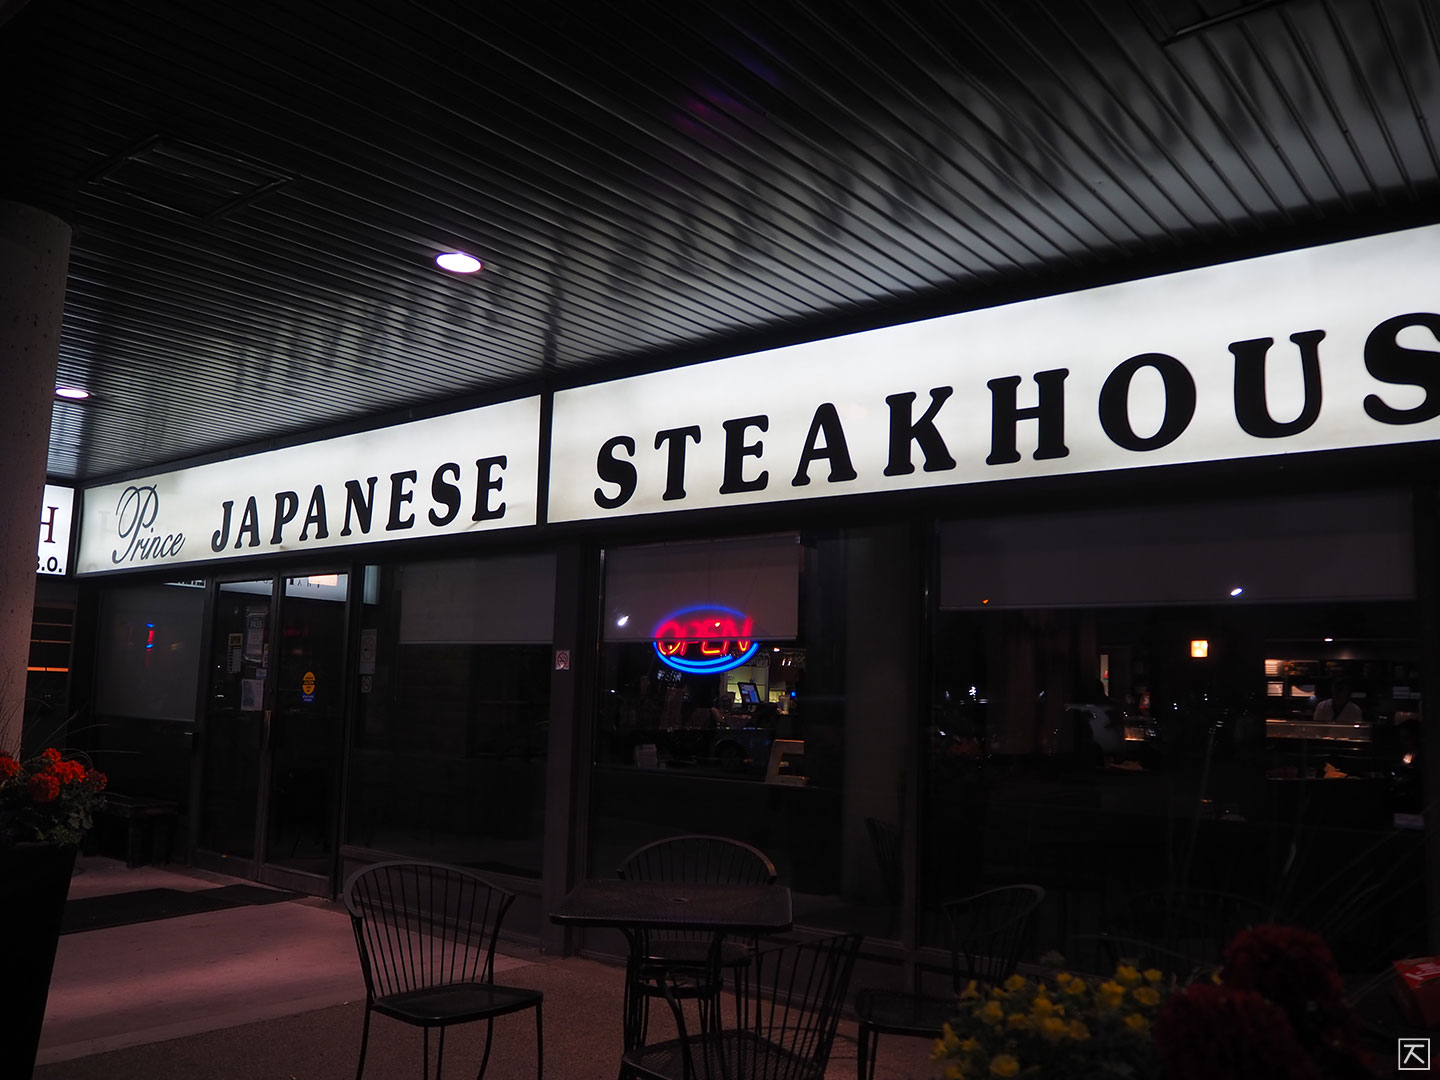 Prince Japanese Steak House 간판